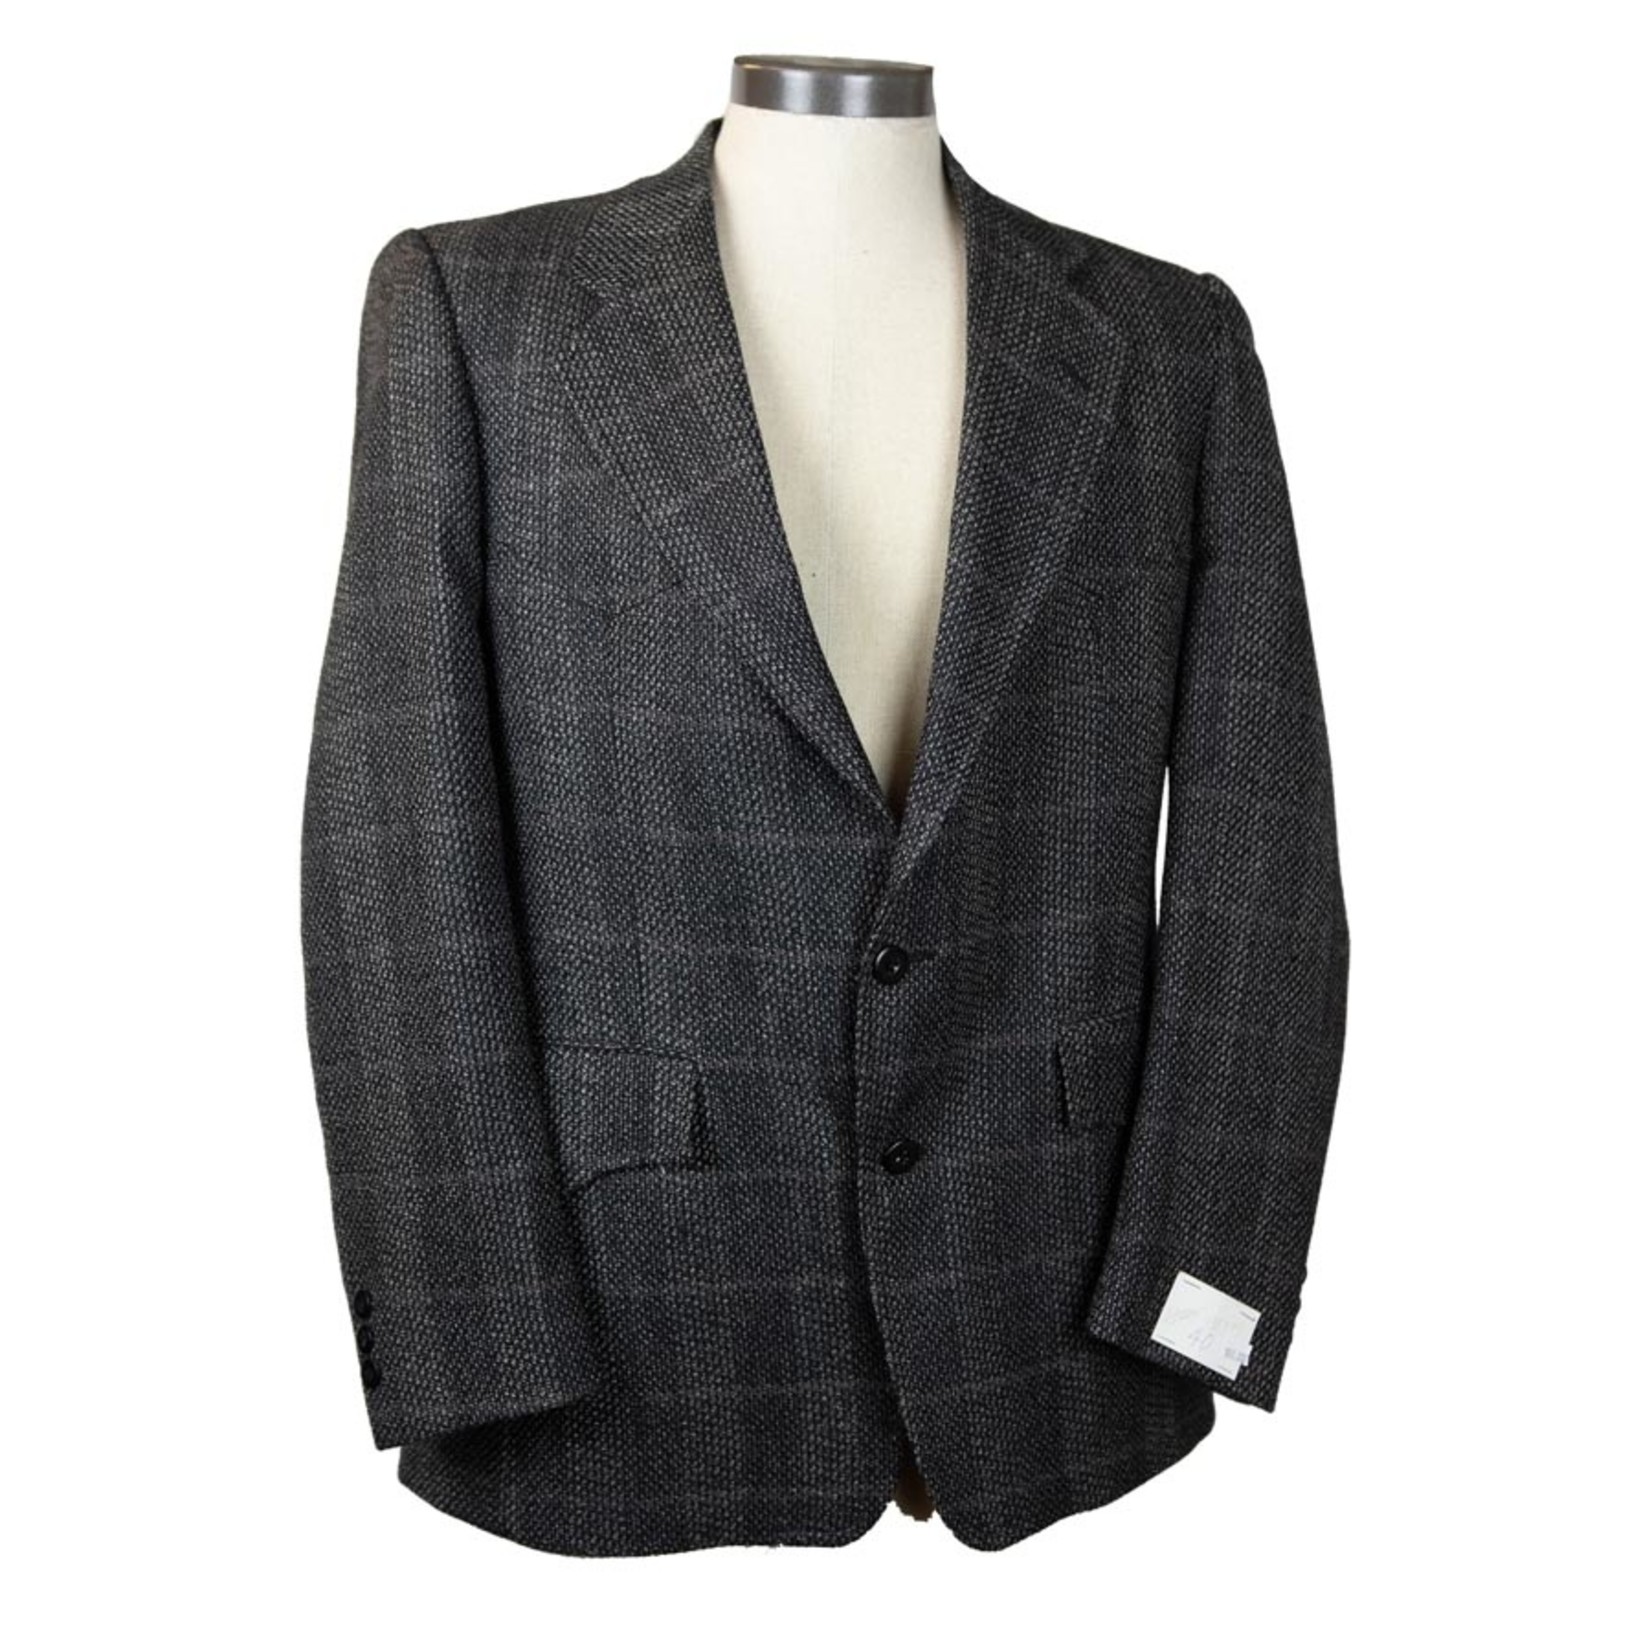 Admiration Wool Vintage Suit Jacket - Size 40 - #24